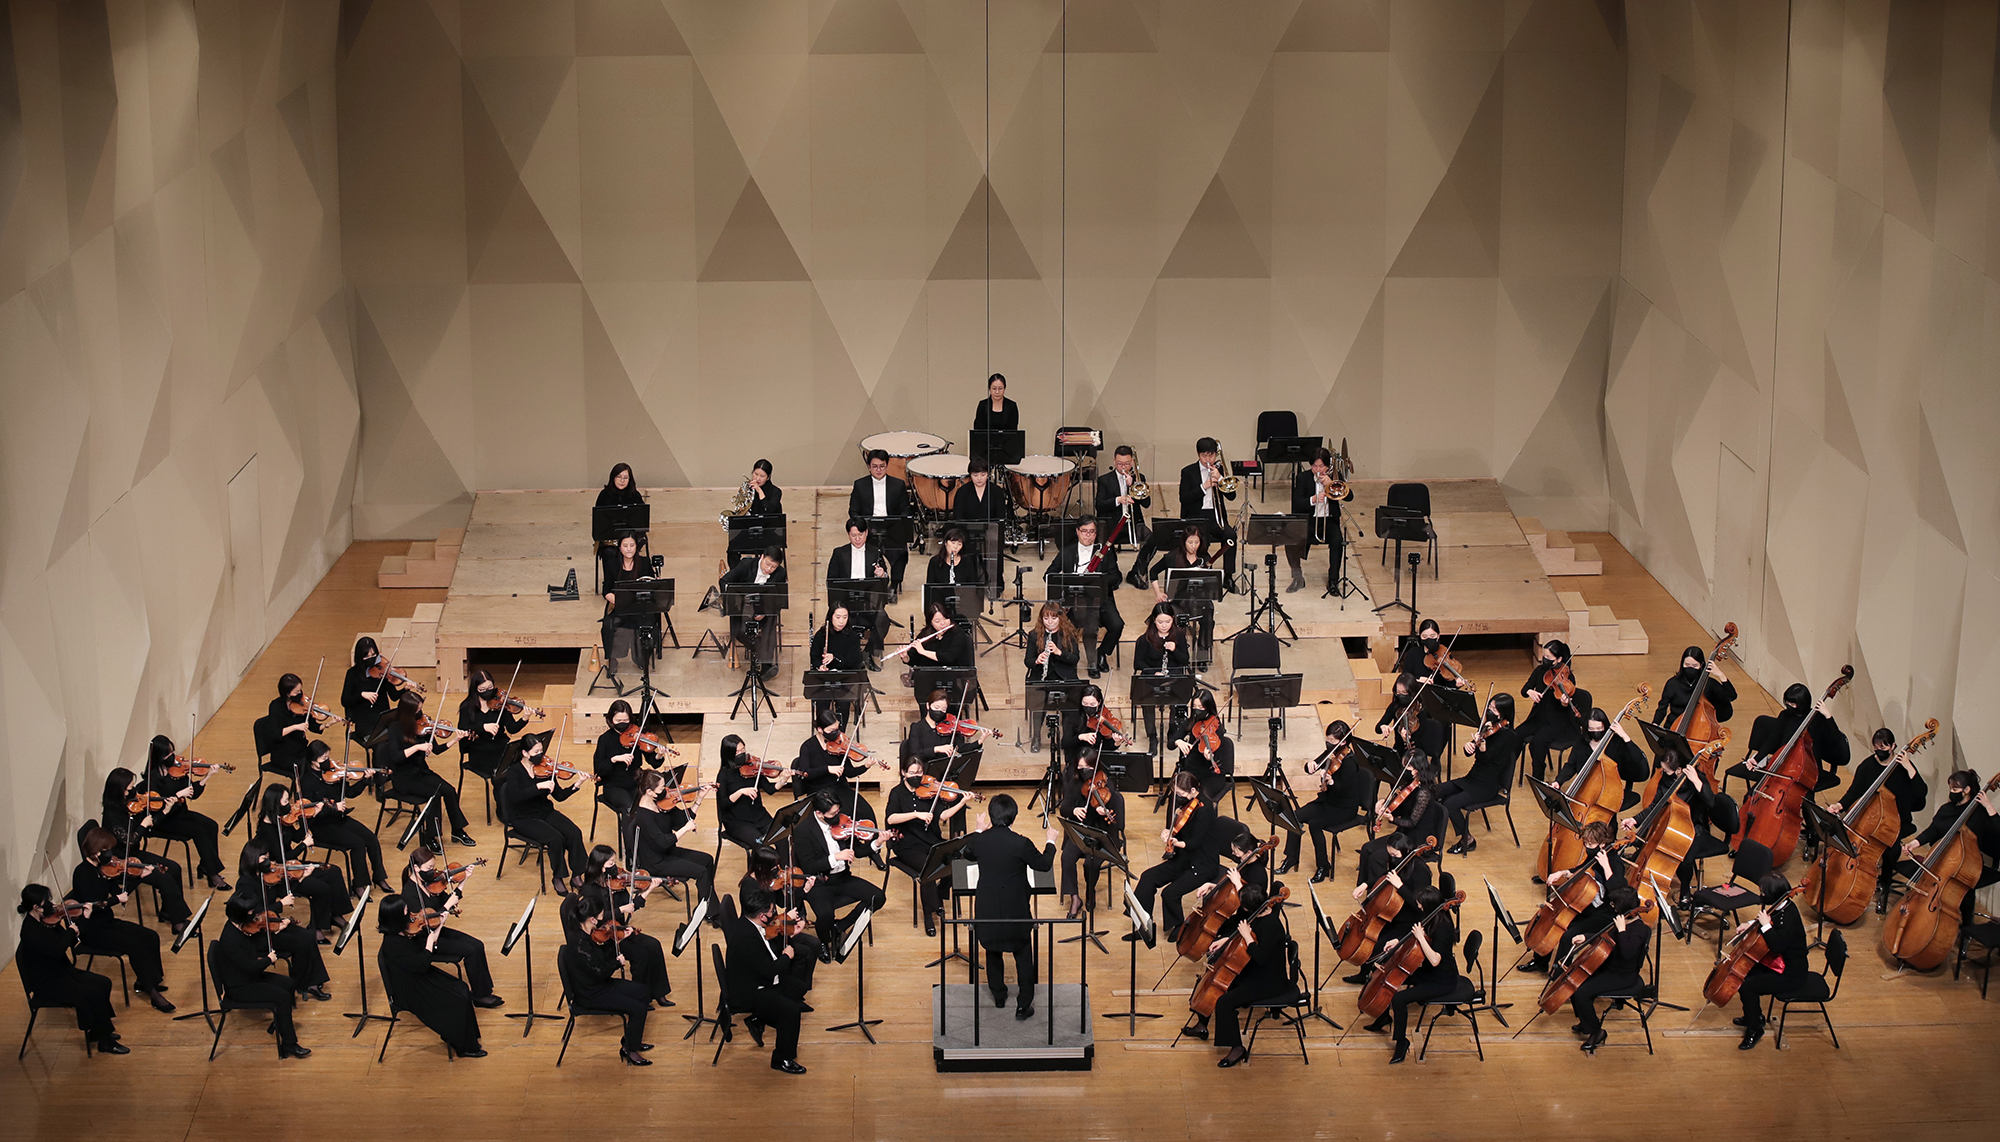 [2.18]Bucheon Philharmonic Orchestra 286th Subscription Concert 